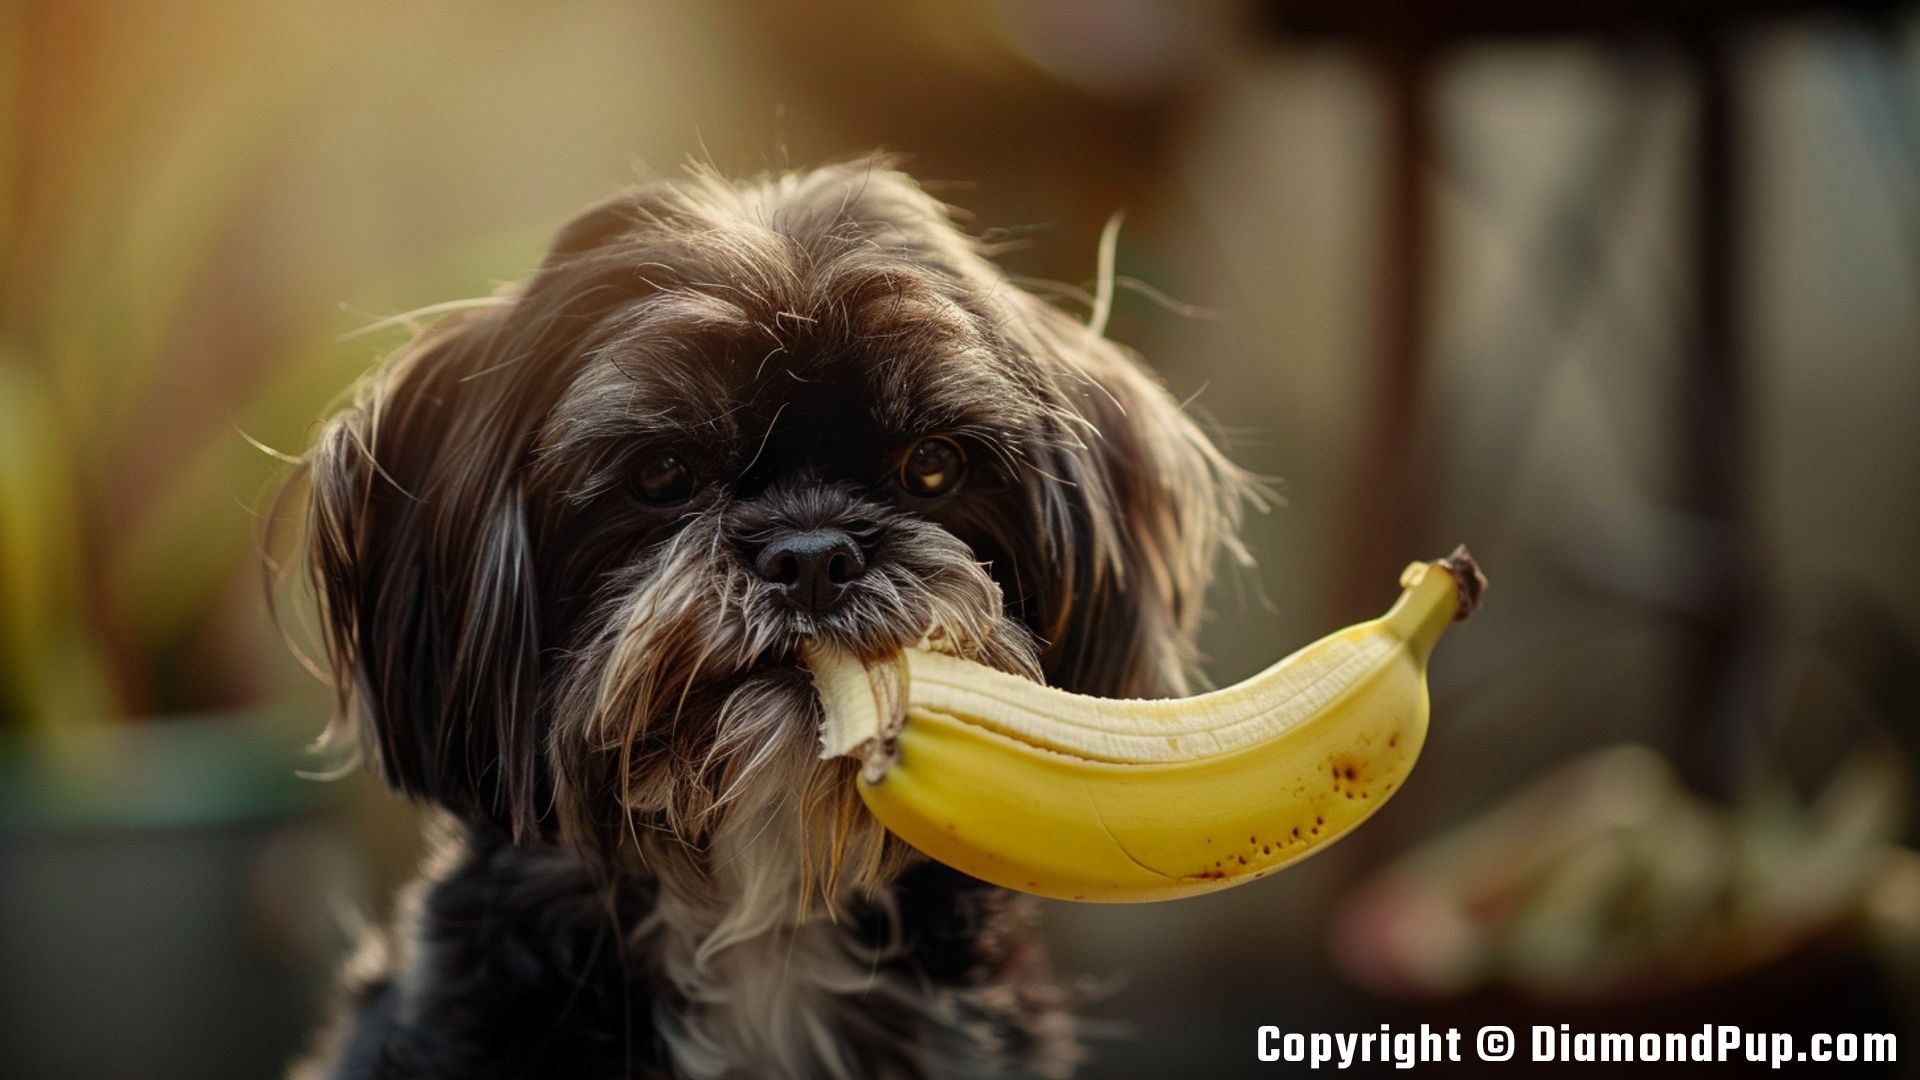 Photograph of an Adorable Shih Tzu Eating Banana